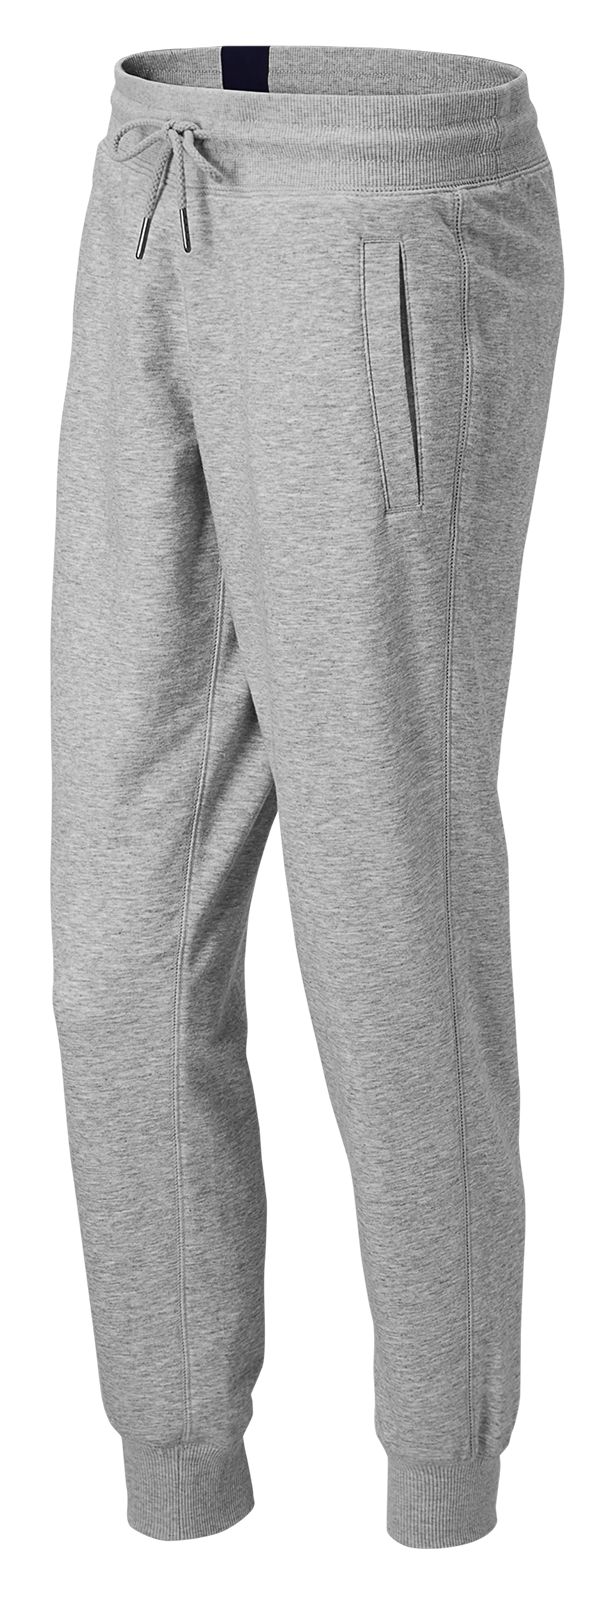 Essentials Plus Classic Sweatpant - Women's 53502 - Pants, Lifestyle ...